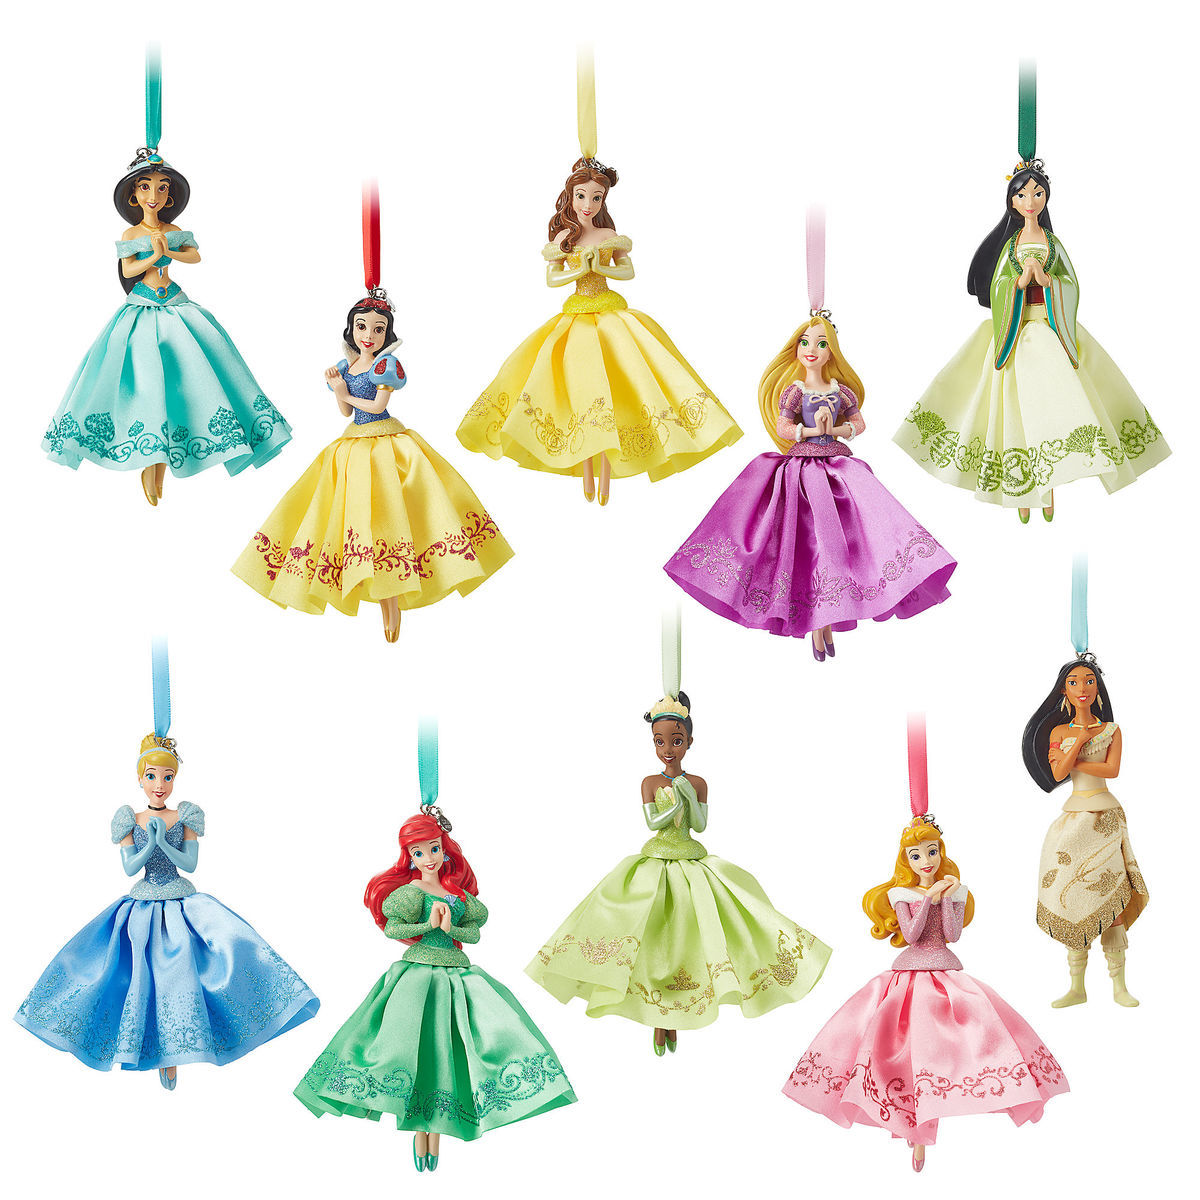 Disney Store Princess Sketchbook Ornament Set 10 Pieces Ariel Belle Mulan Aurora